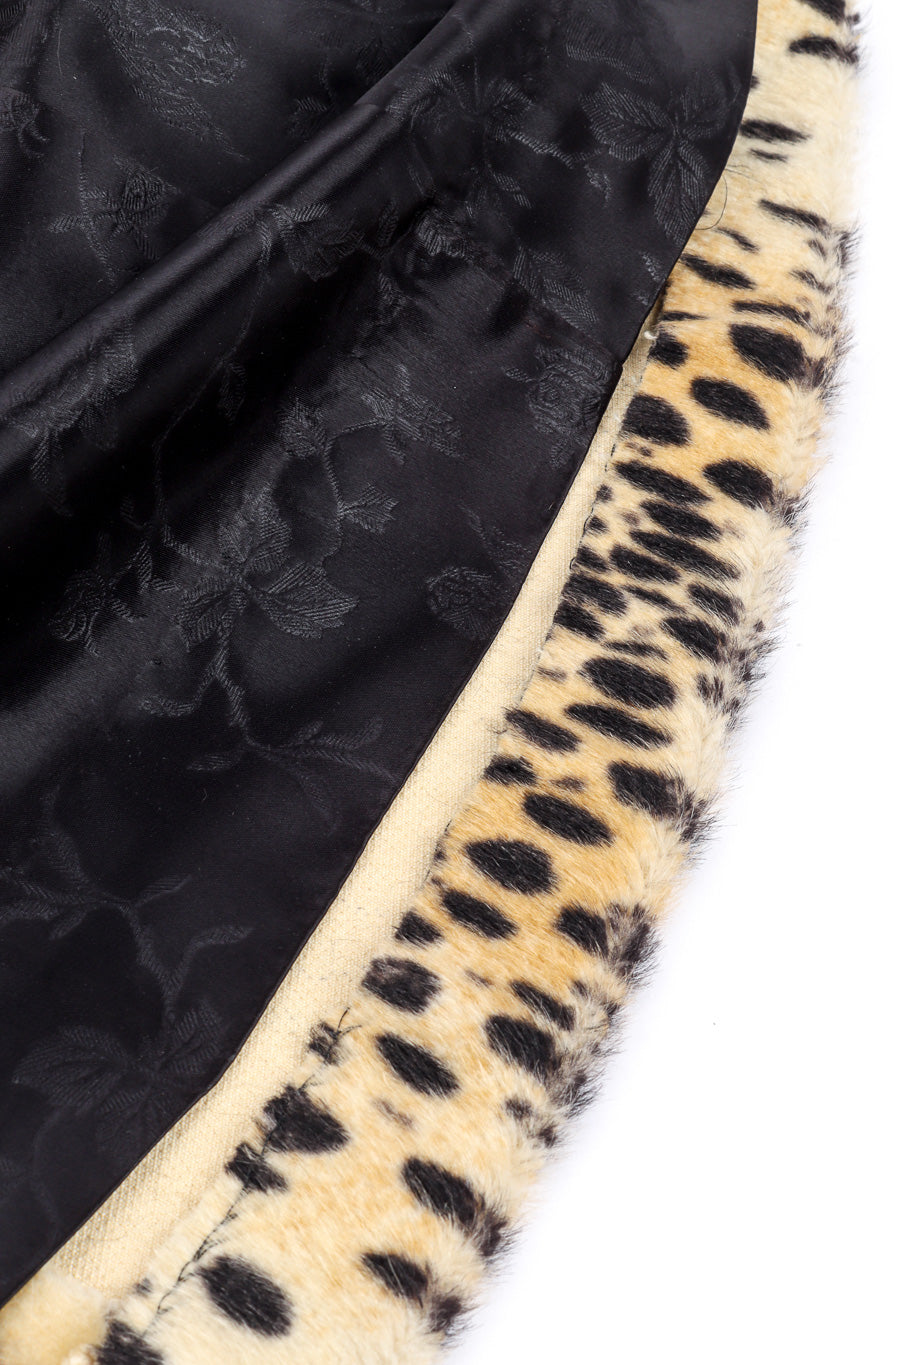 Cheetah Print Fur Coat by Russel Tayler hem and lining @recessla